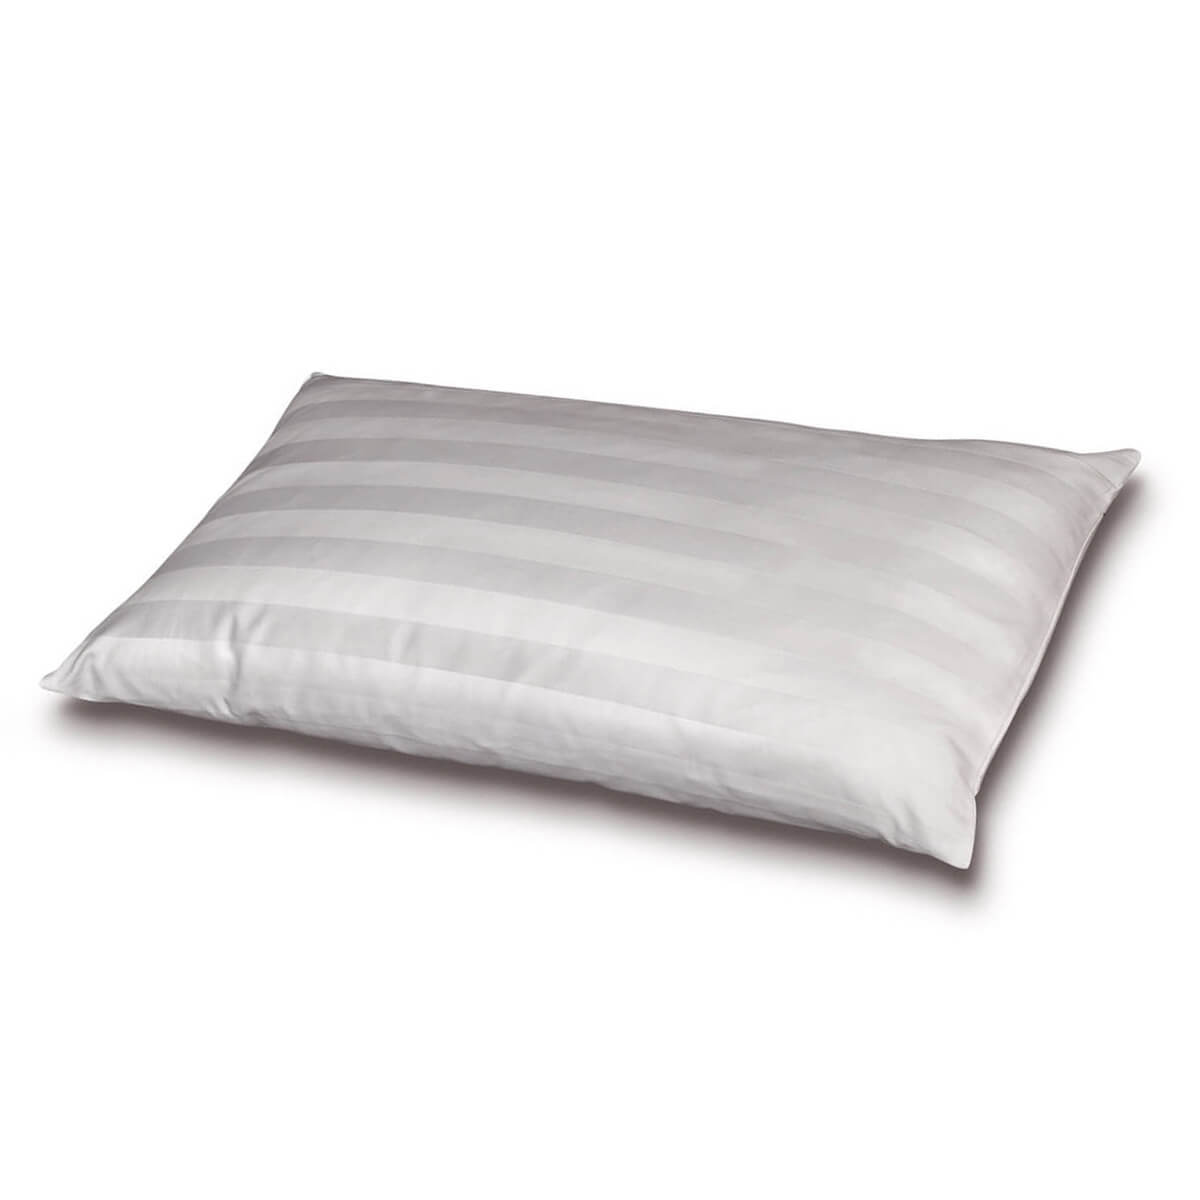 Ecological comfortable siliconized hollow fiber pillow. MEDIUM firmness.